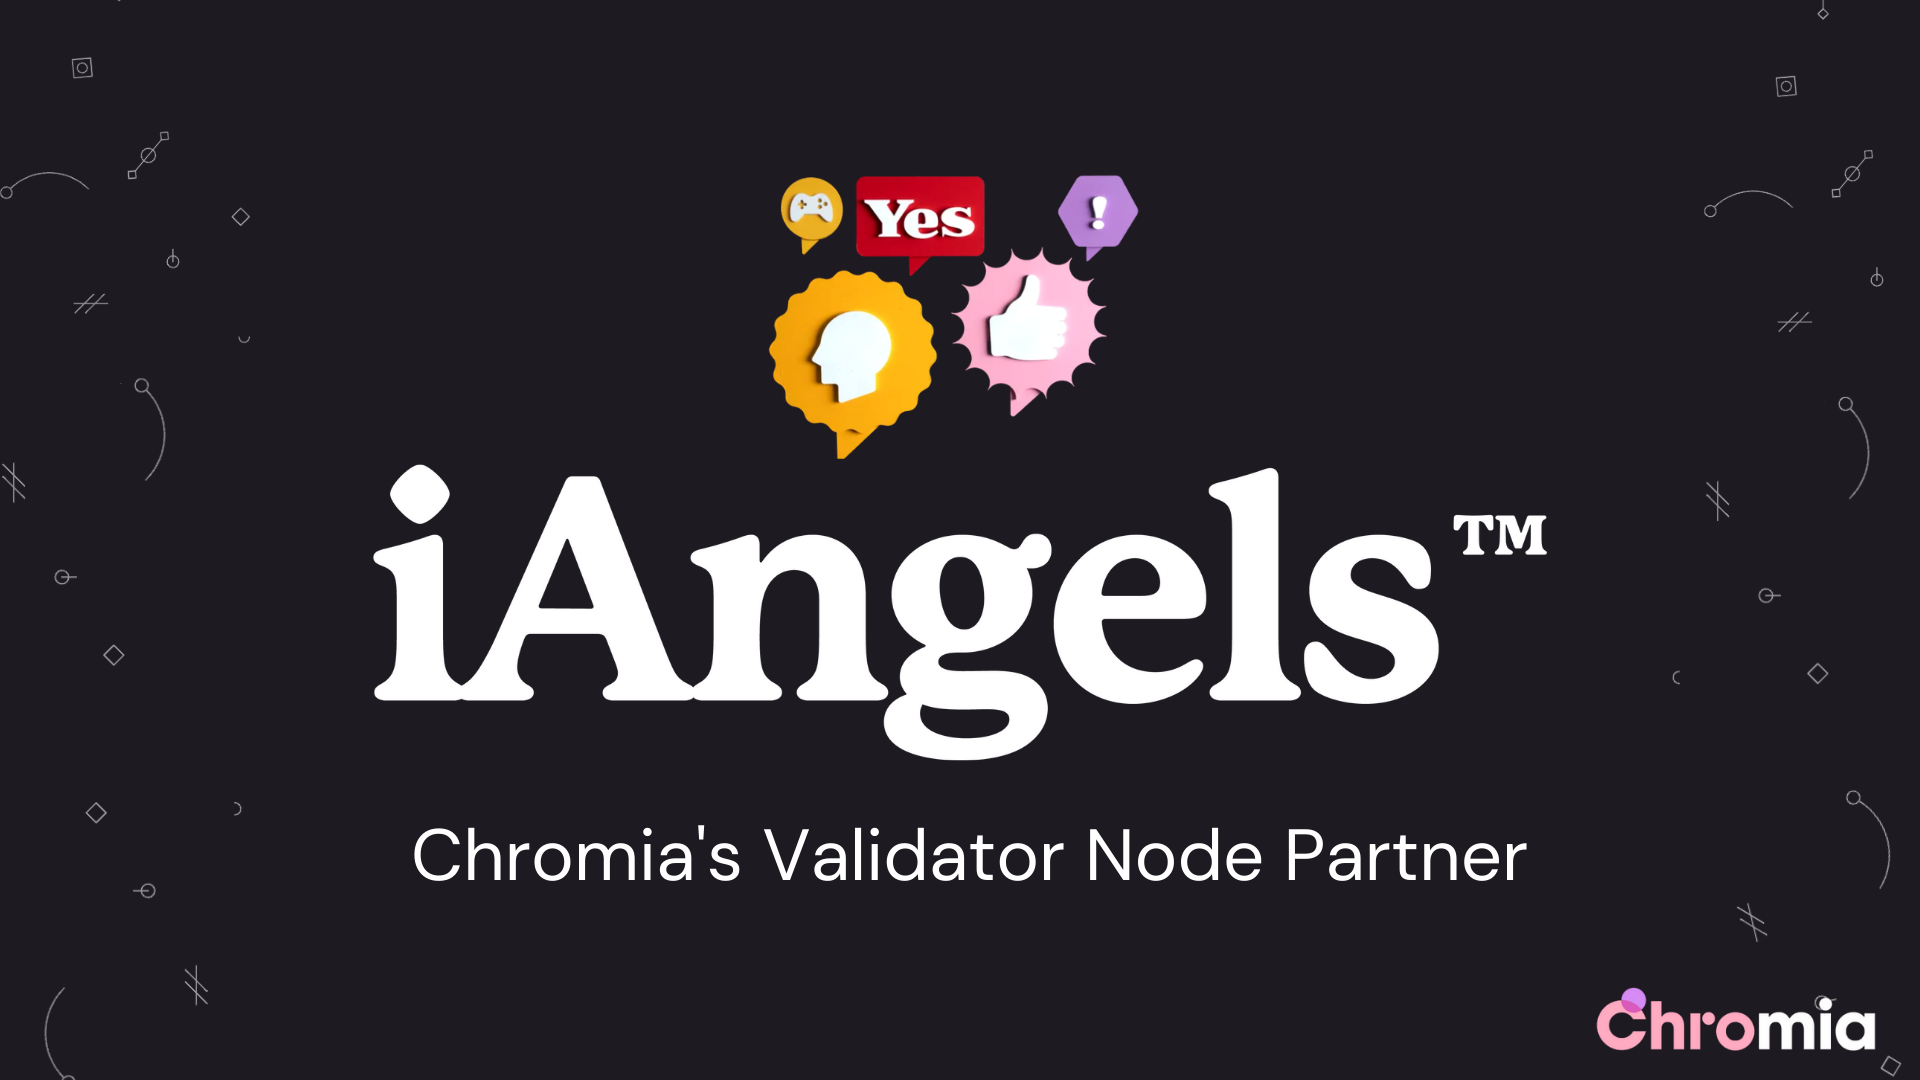 Introducing Chromia Validator Node Partner: iAngels